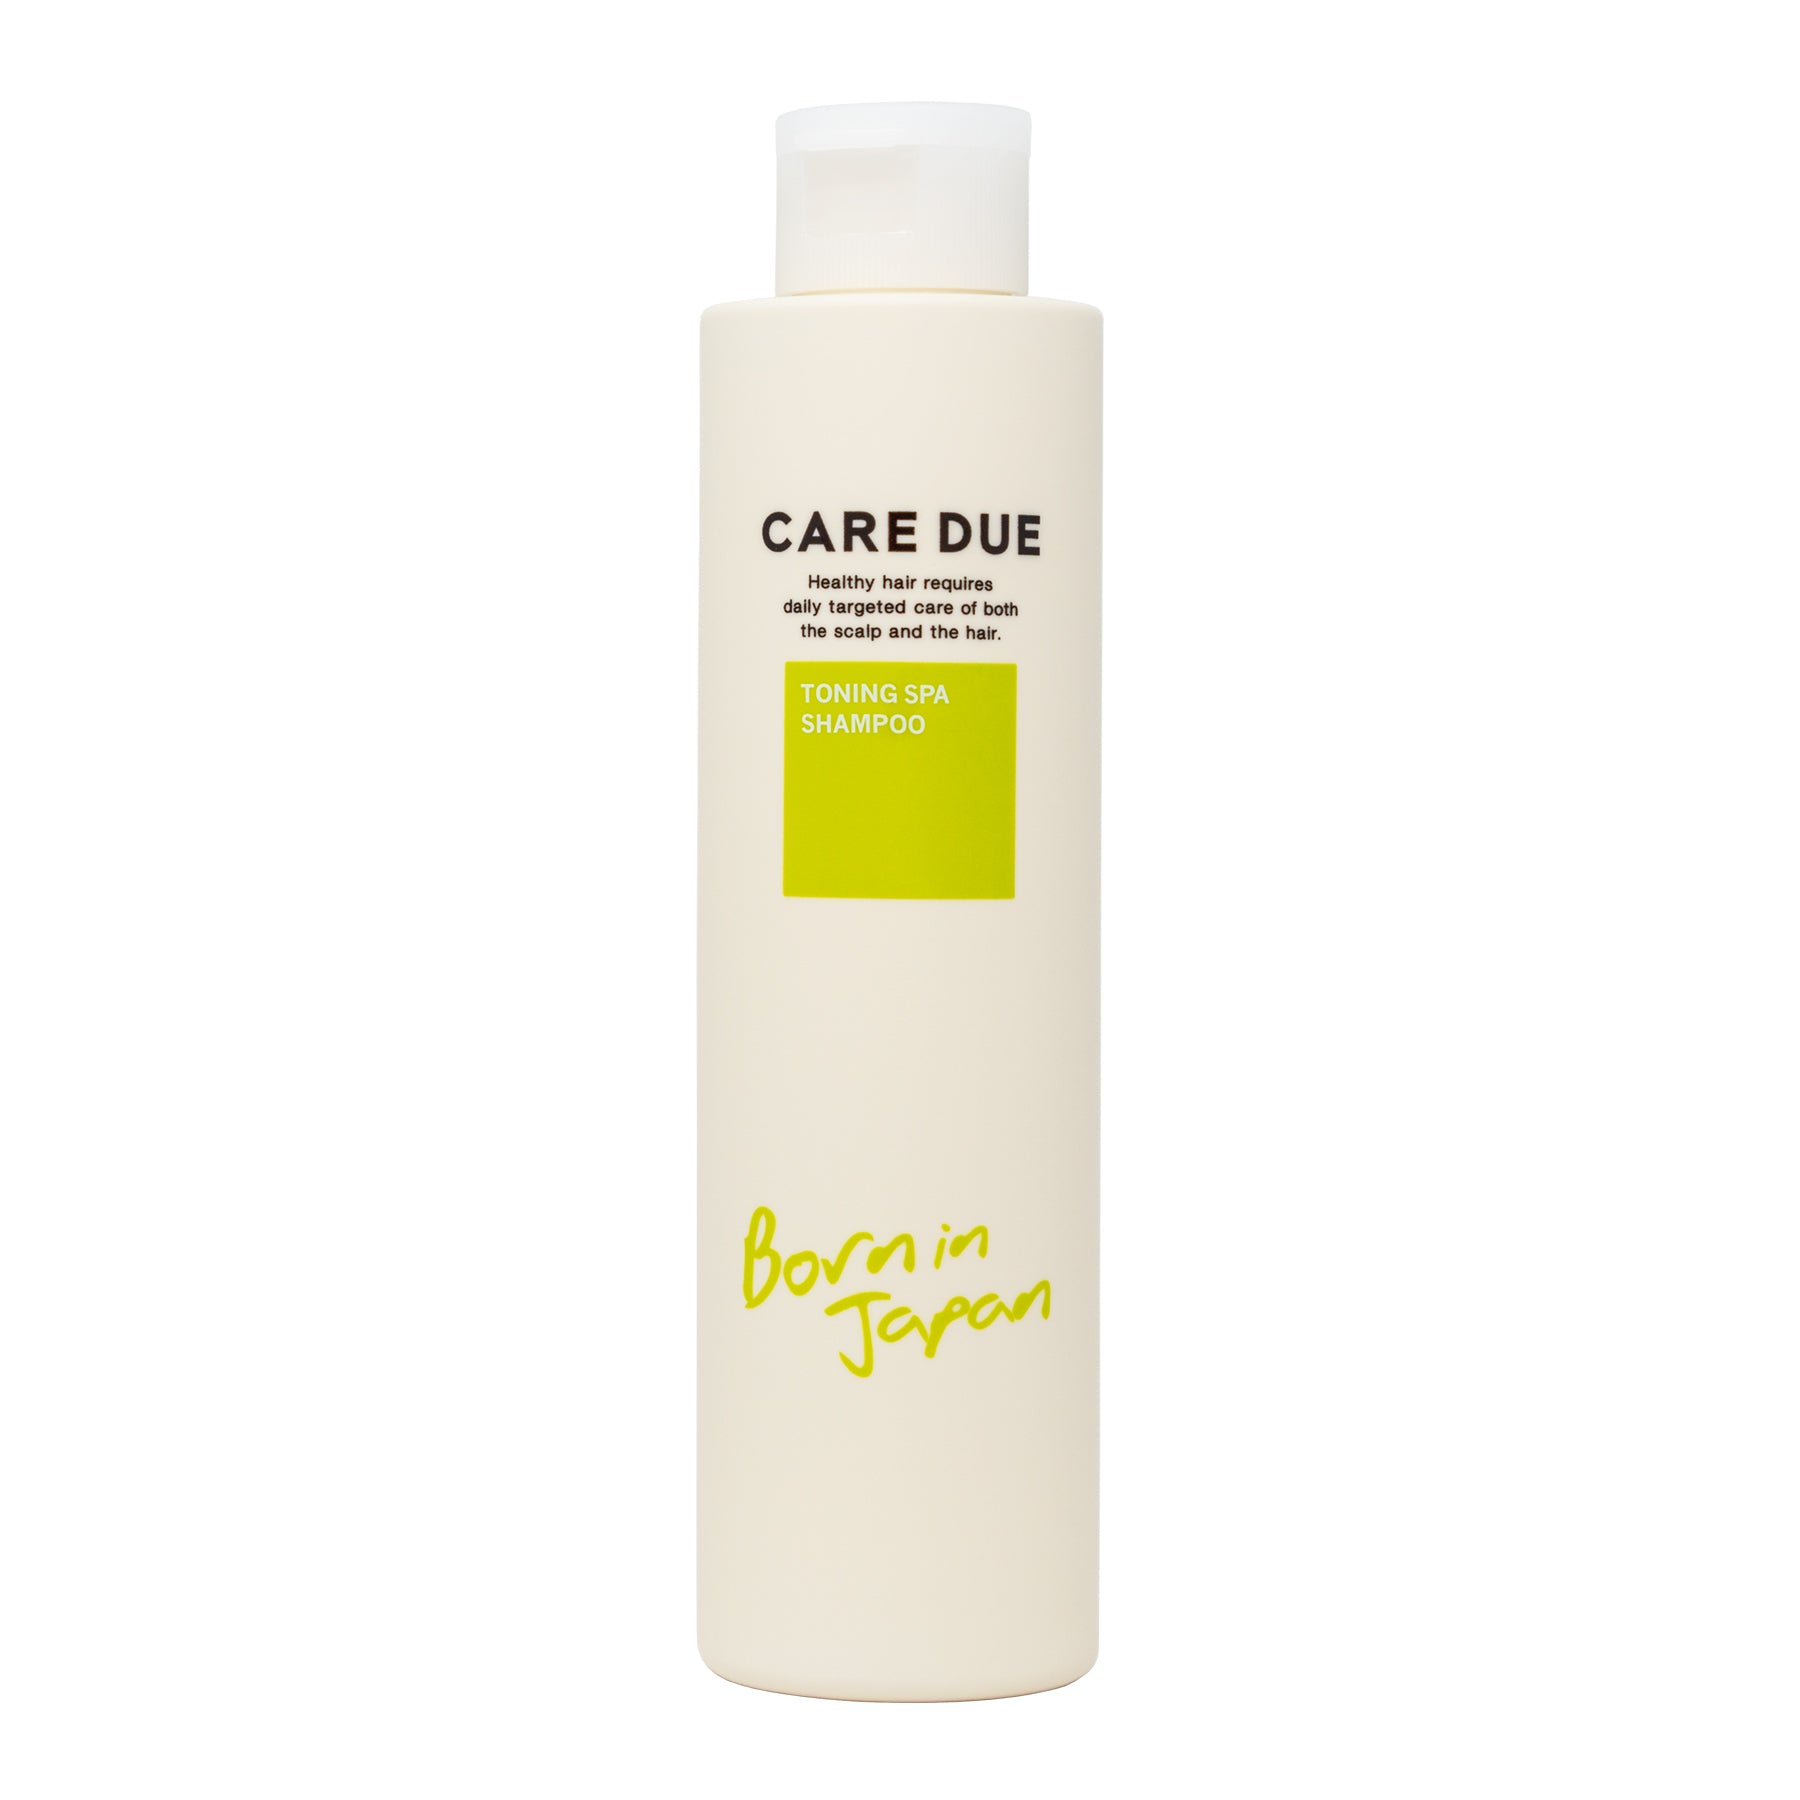 Care Due Toning Spa Shampoo